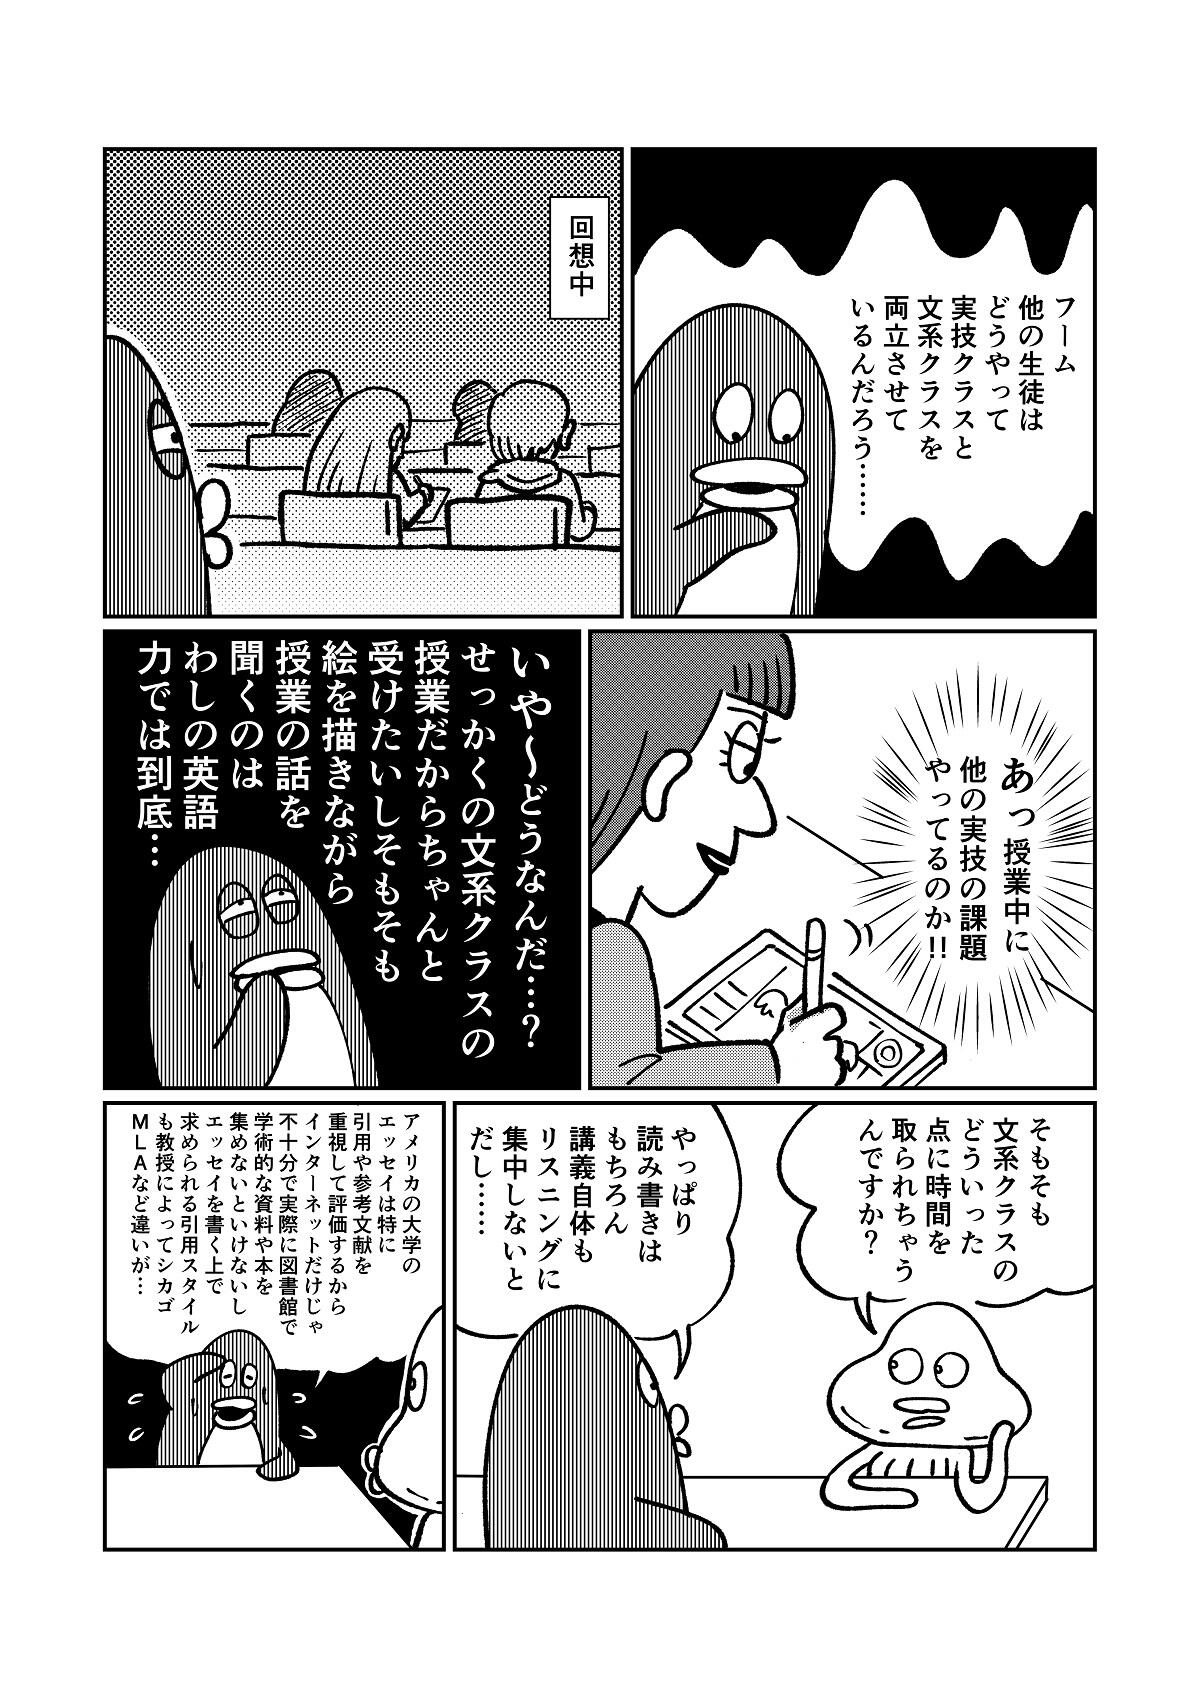 https://www.ryugaku.co.jp/column/images/jawamura16_3_1200.jpg